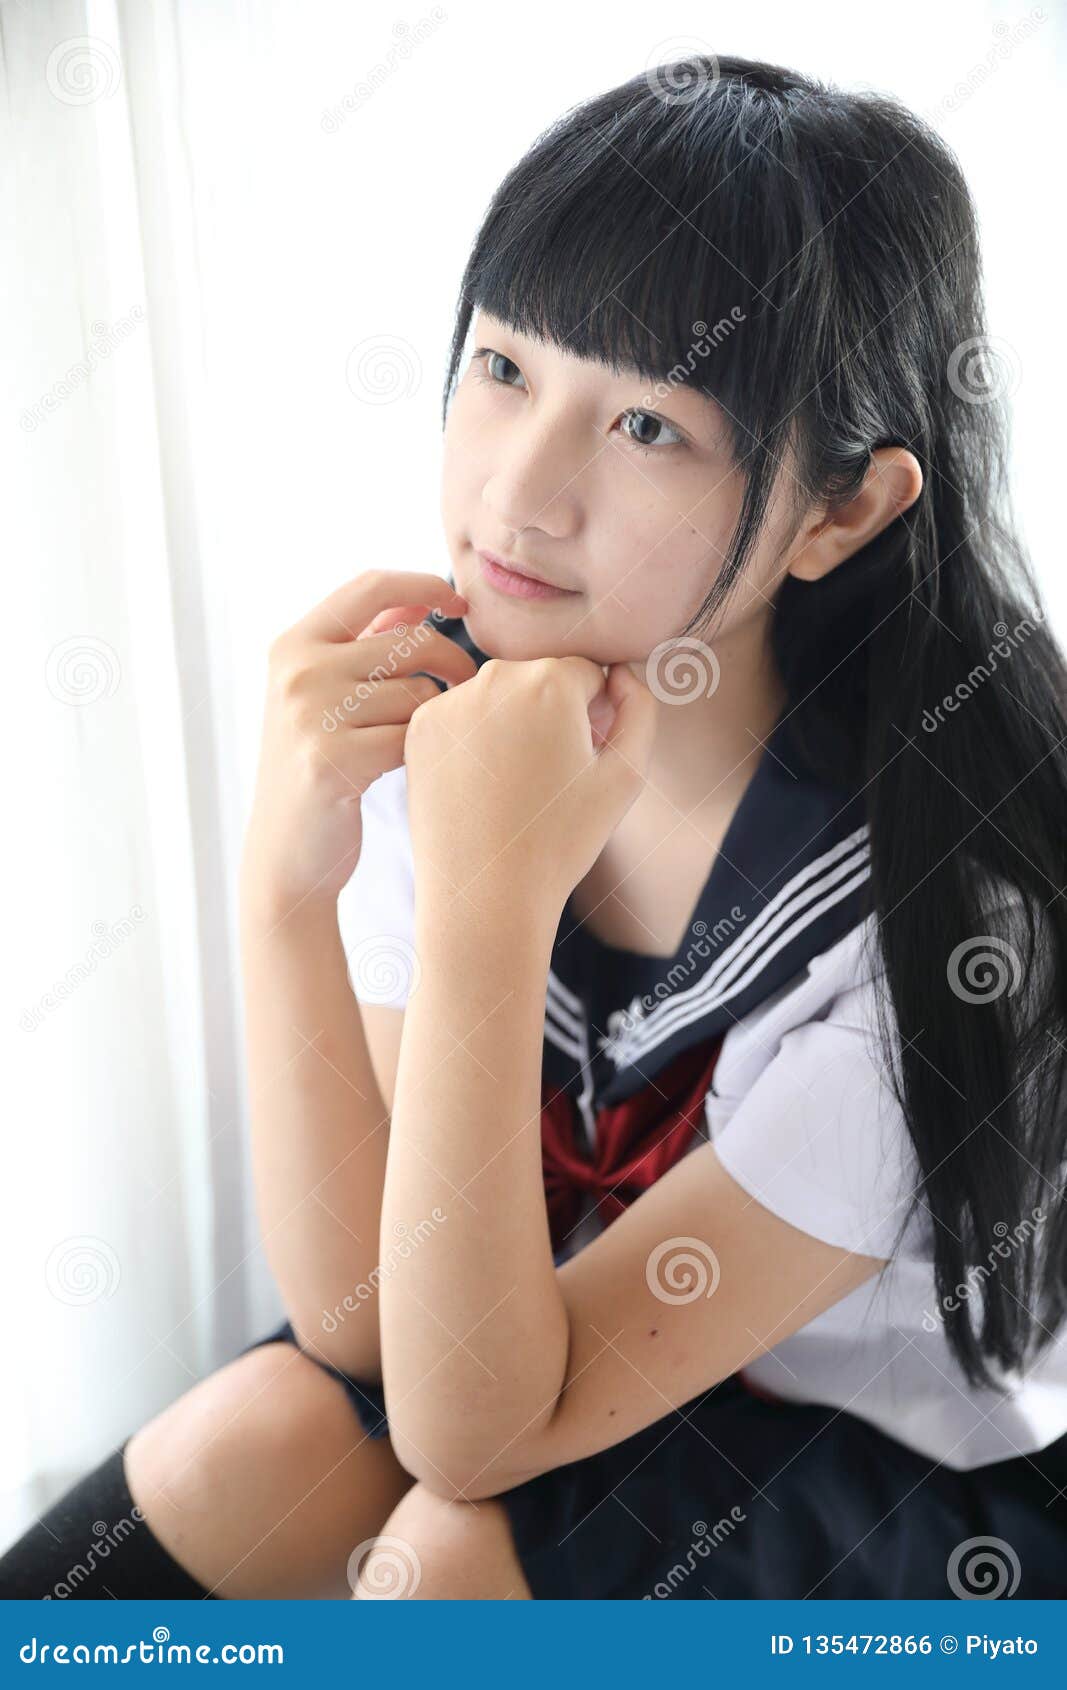 ashley galvin share japanese school girl idol photos